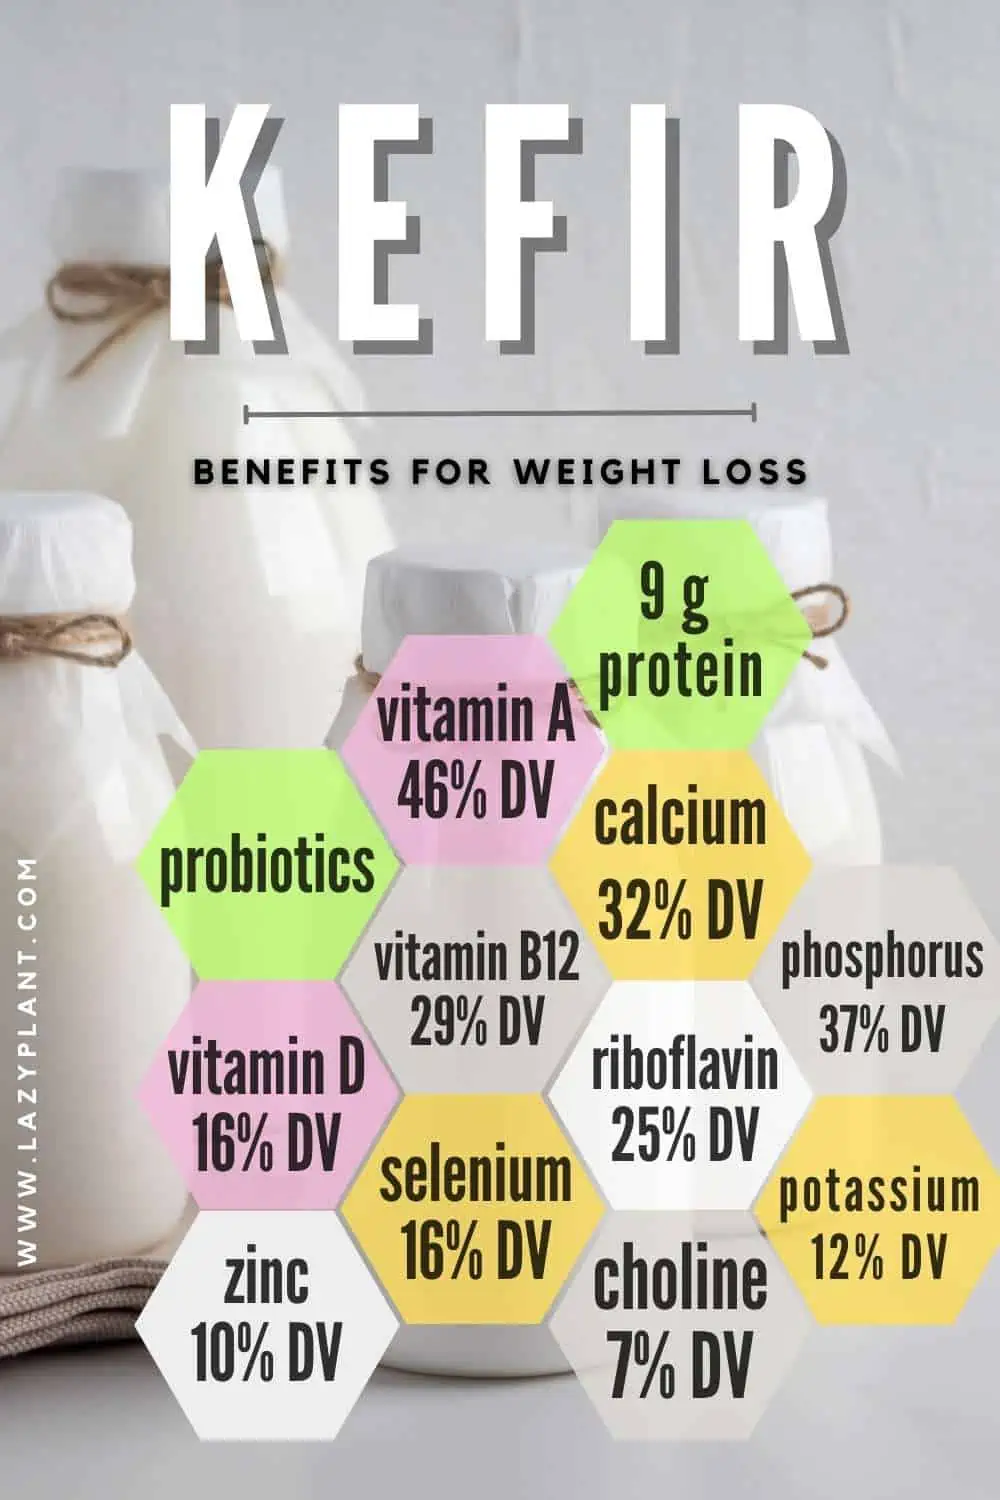 Probiotics, protein, vitamins, and electrolytes in kefir help lose weight.